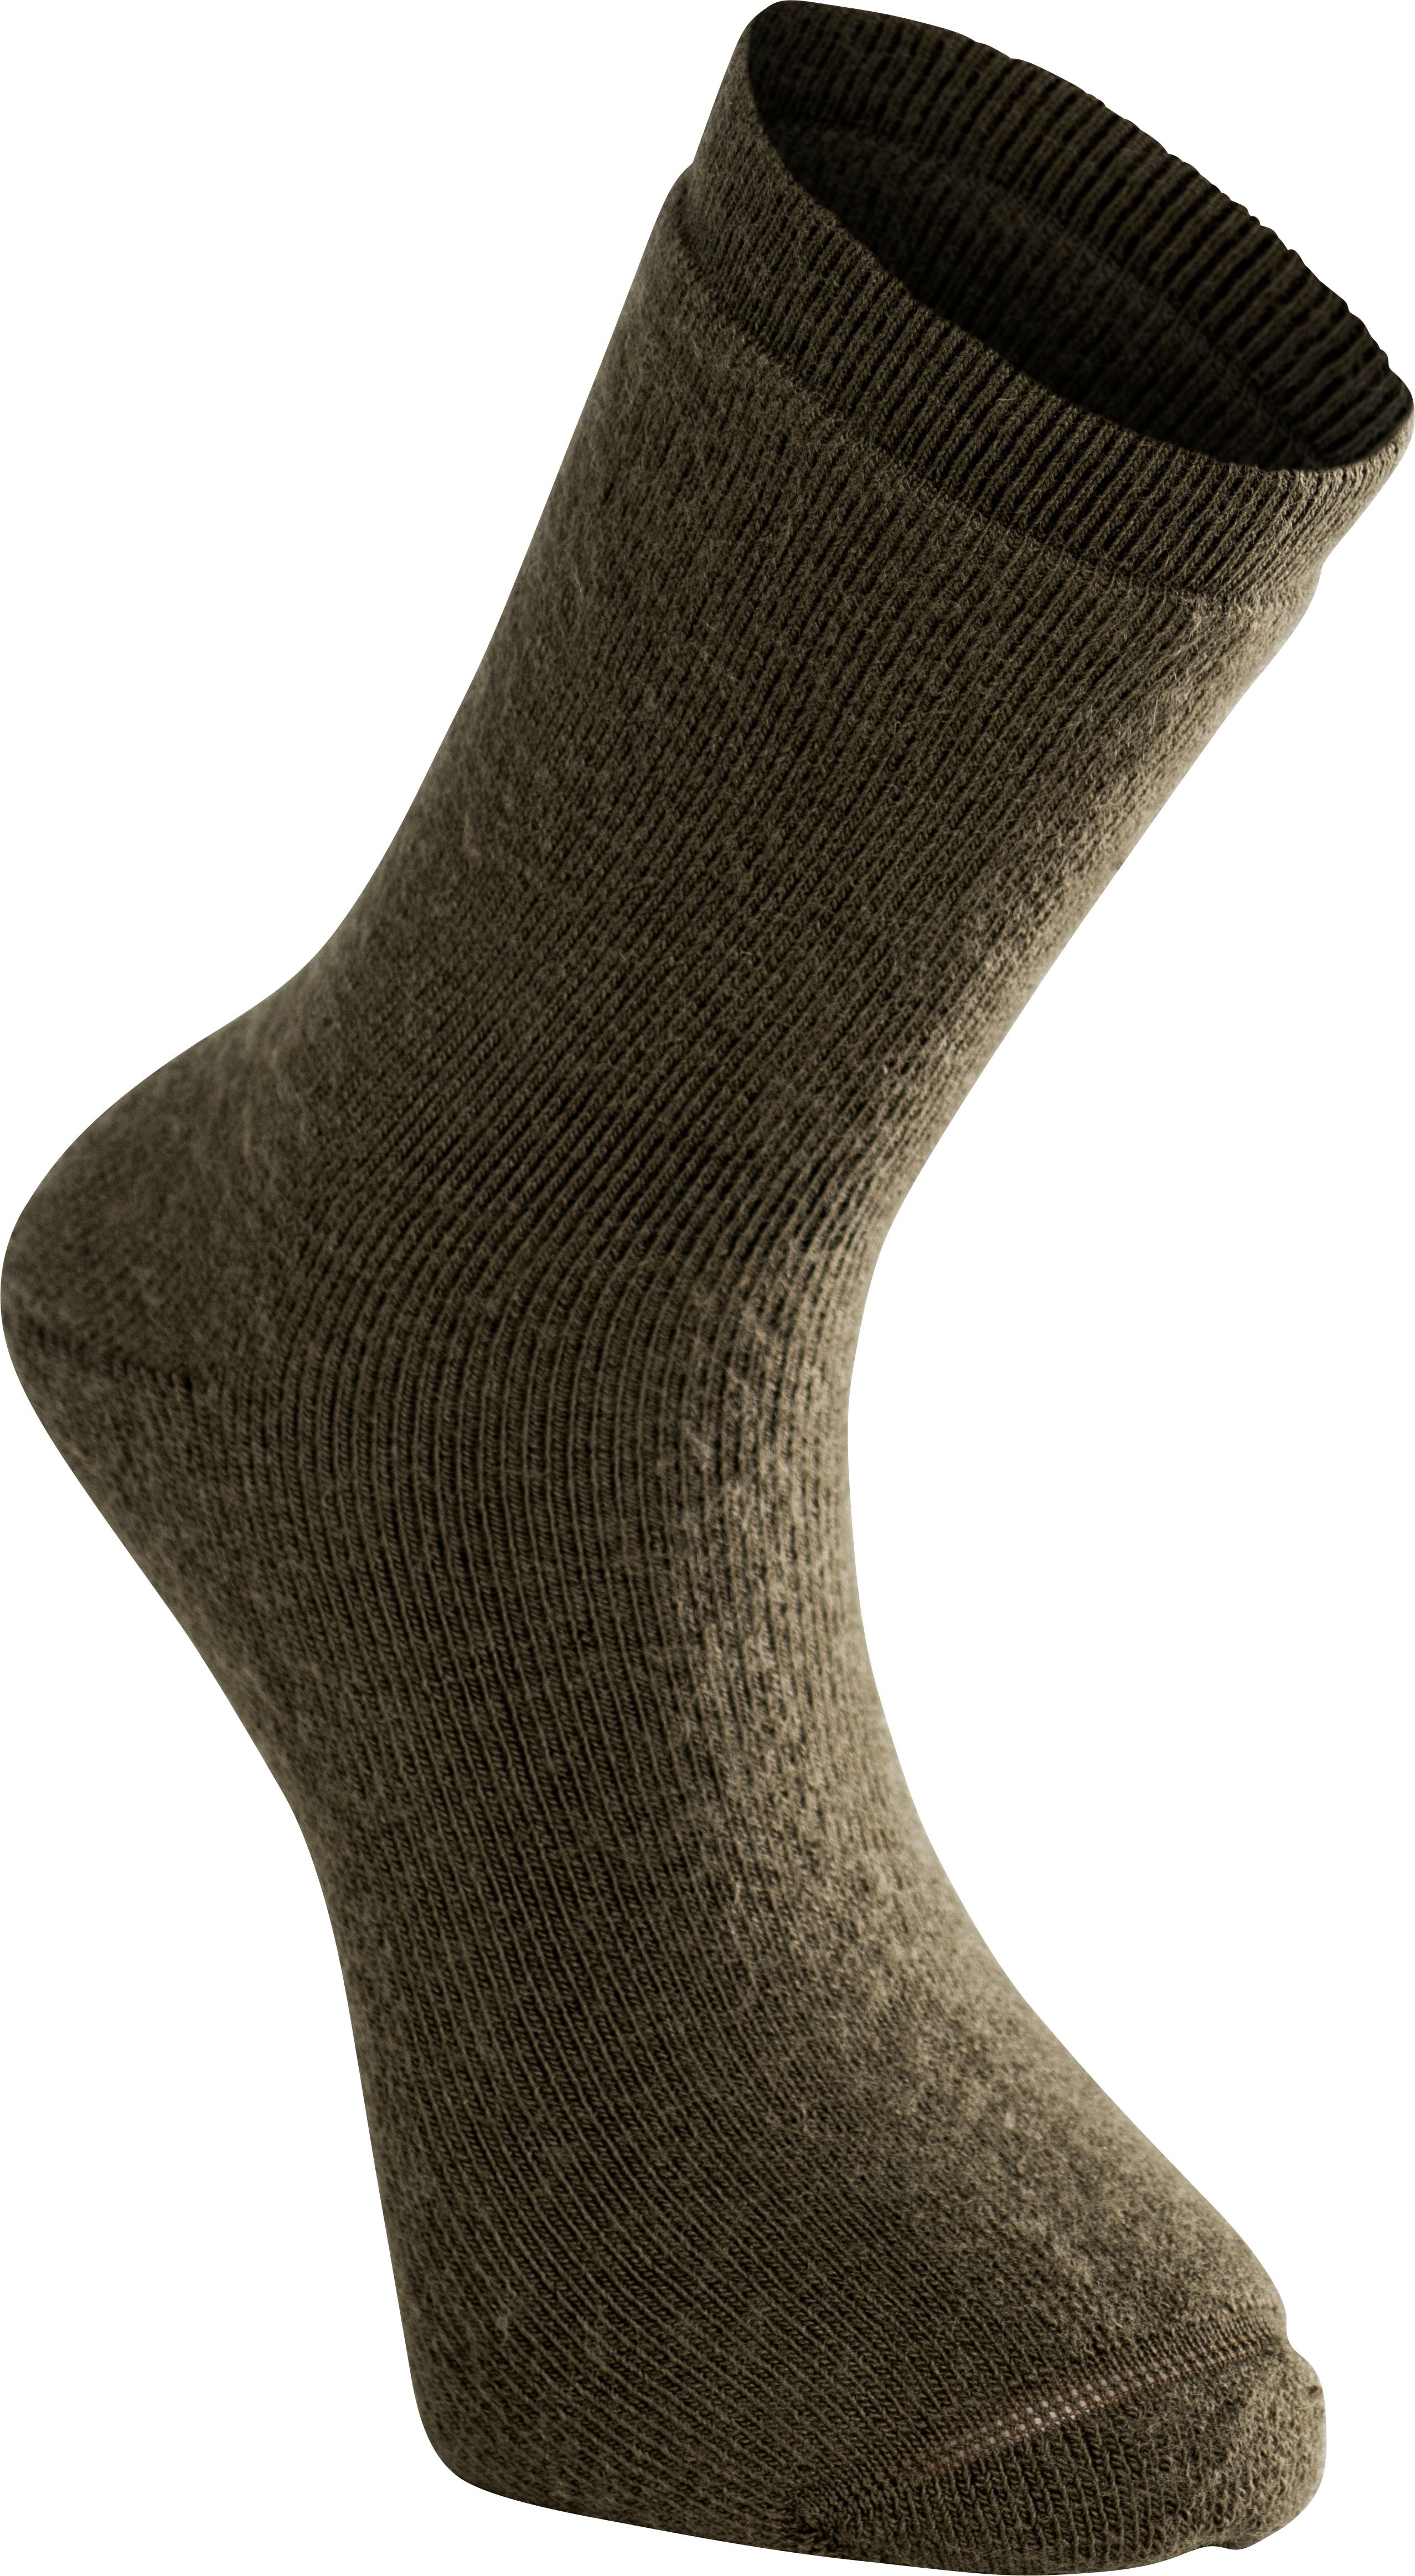 Socks Classic 400 Pine Green - Woolpower